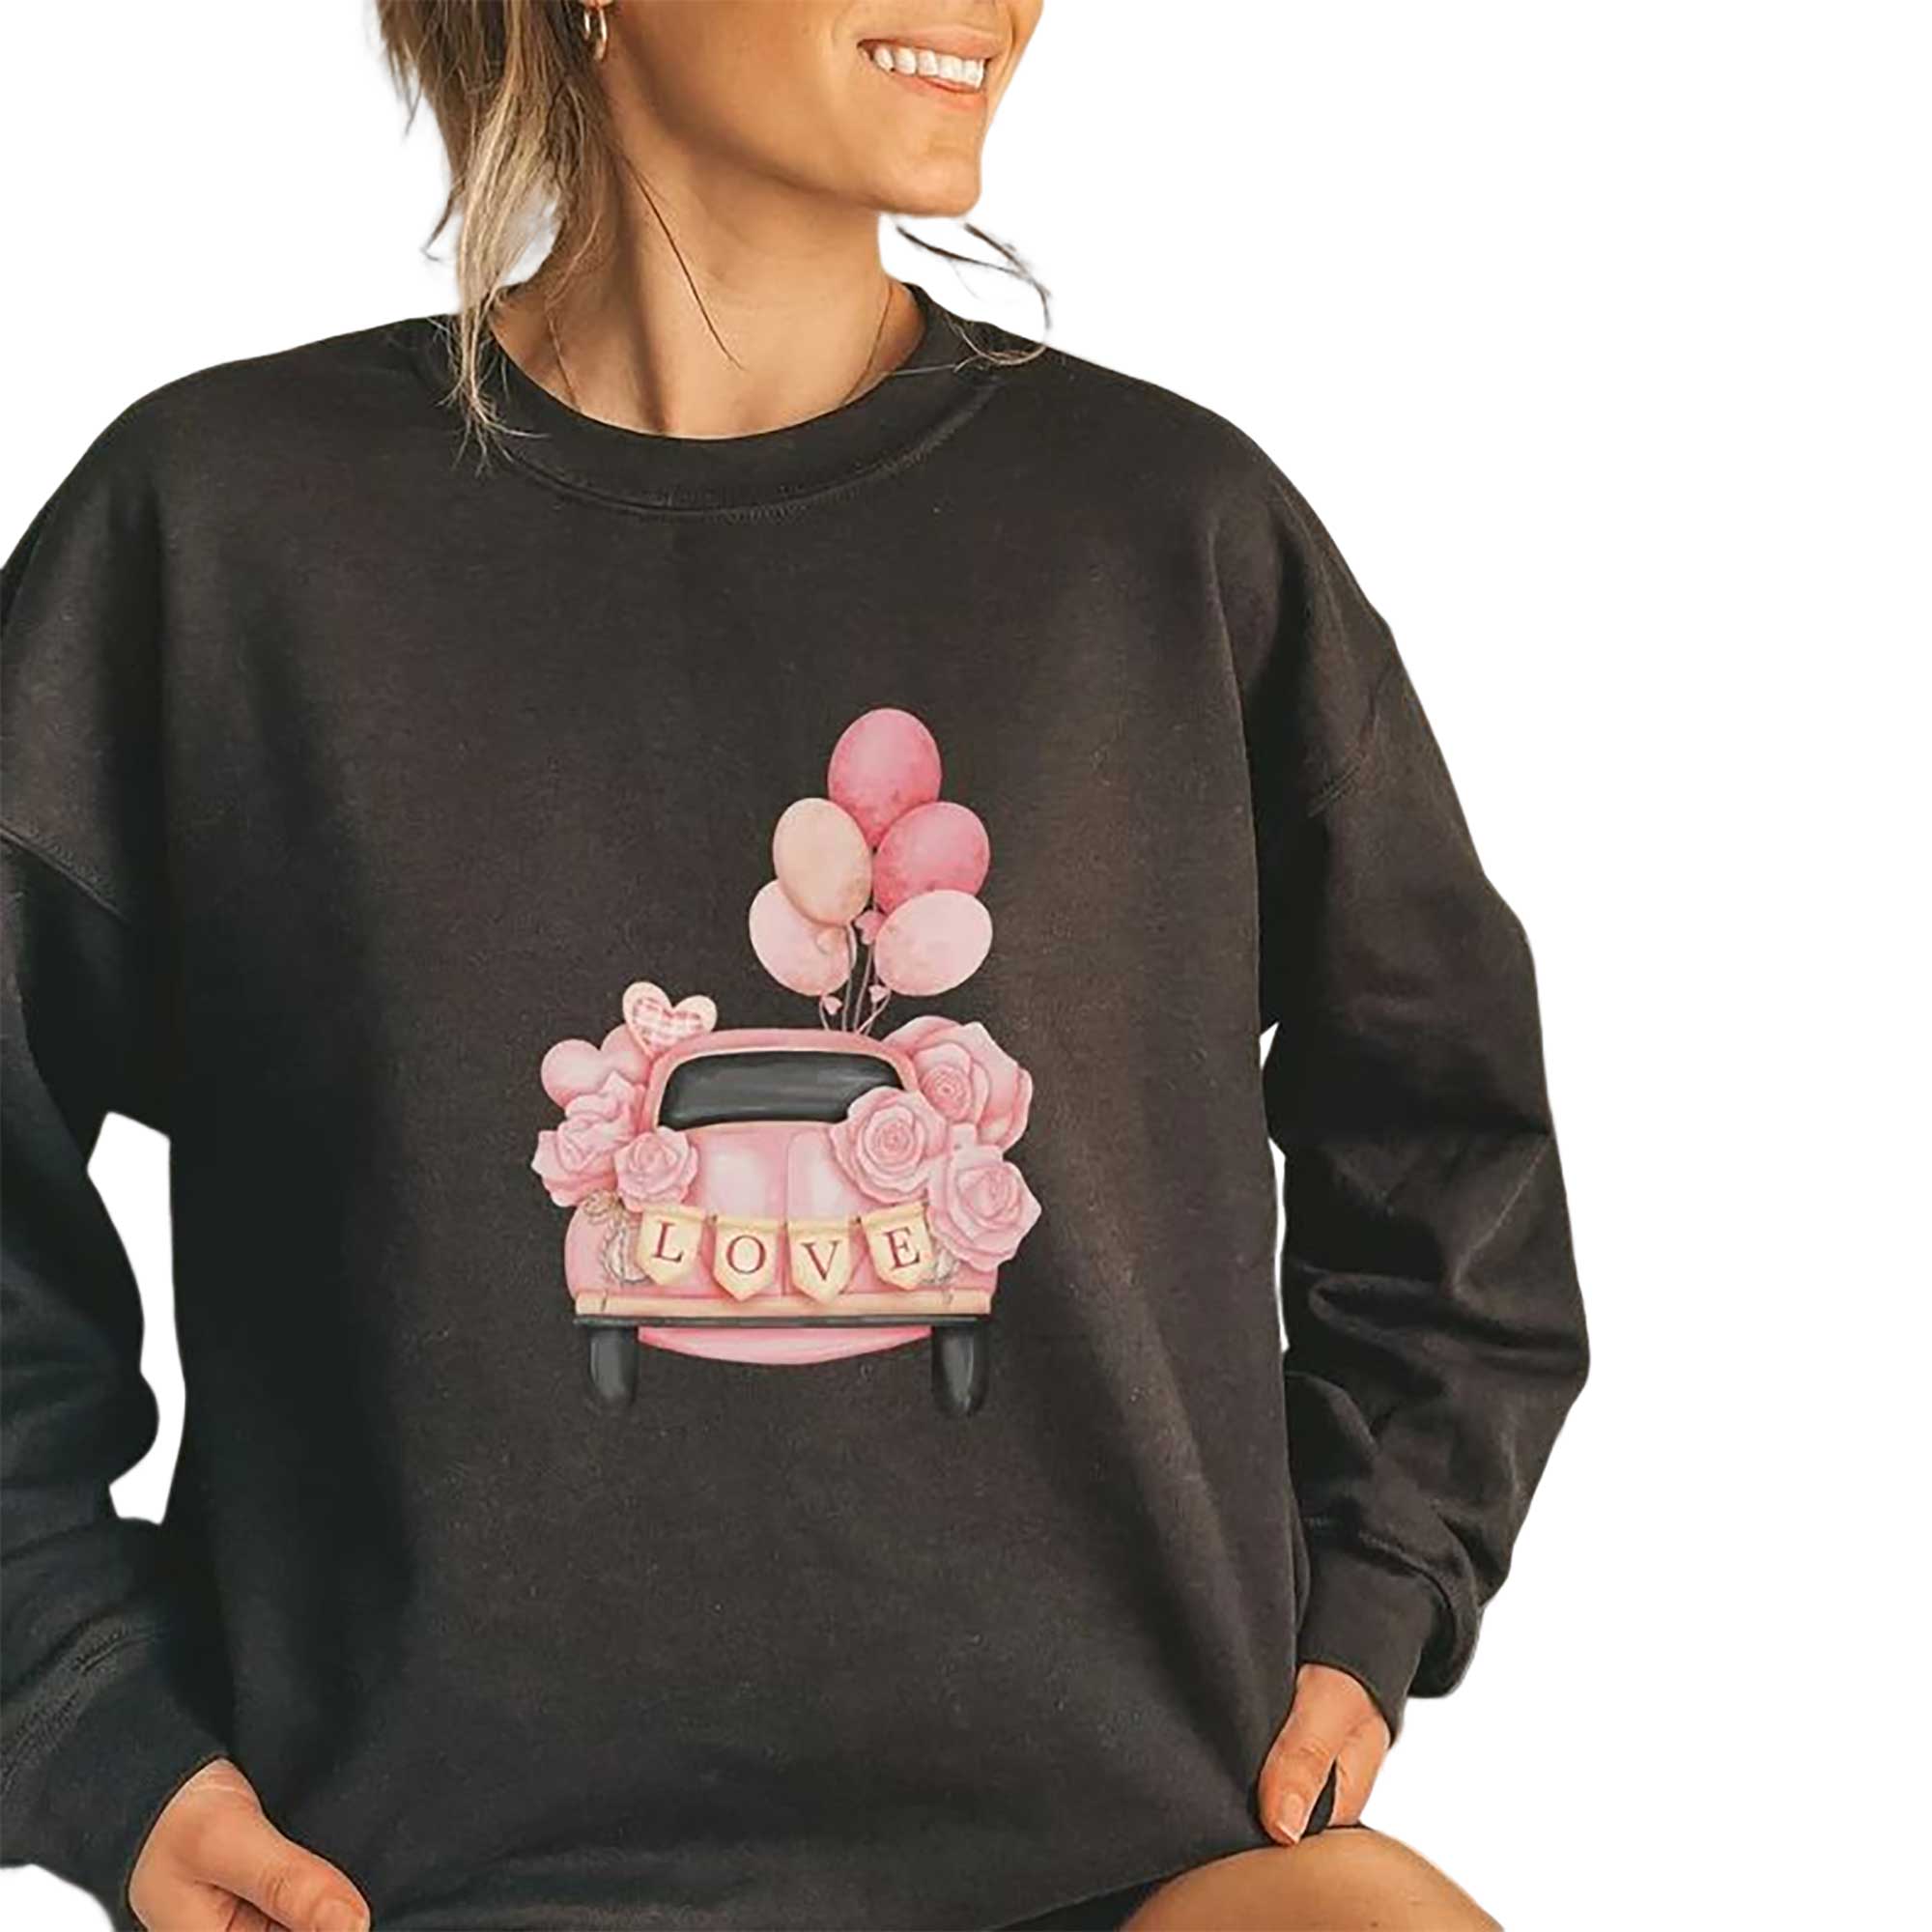 Skitongift-Love-Sweatshirt-Cute-ValentineS-Day-Sweater-Love-Shirt-Cute-Gifts-For-Her-ValentineS-Day-Gifts-Funny-Shirts-Hoodie